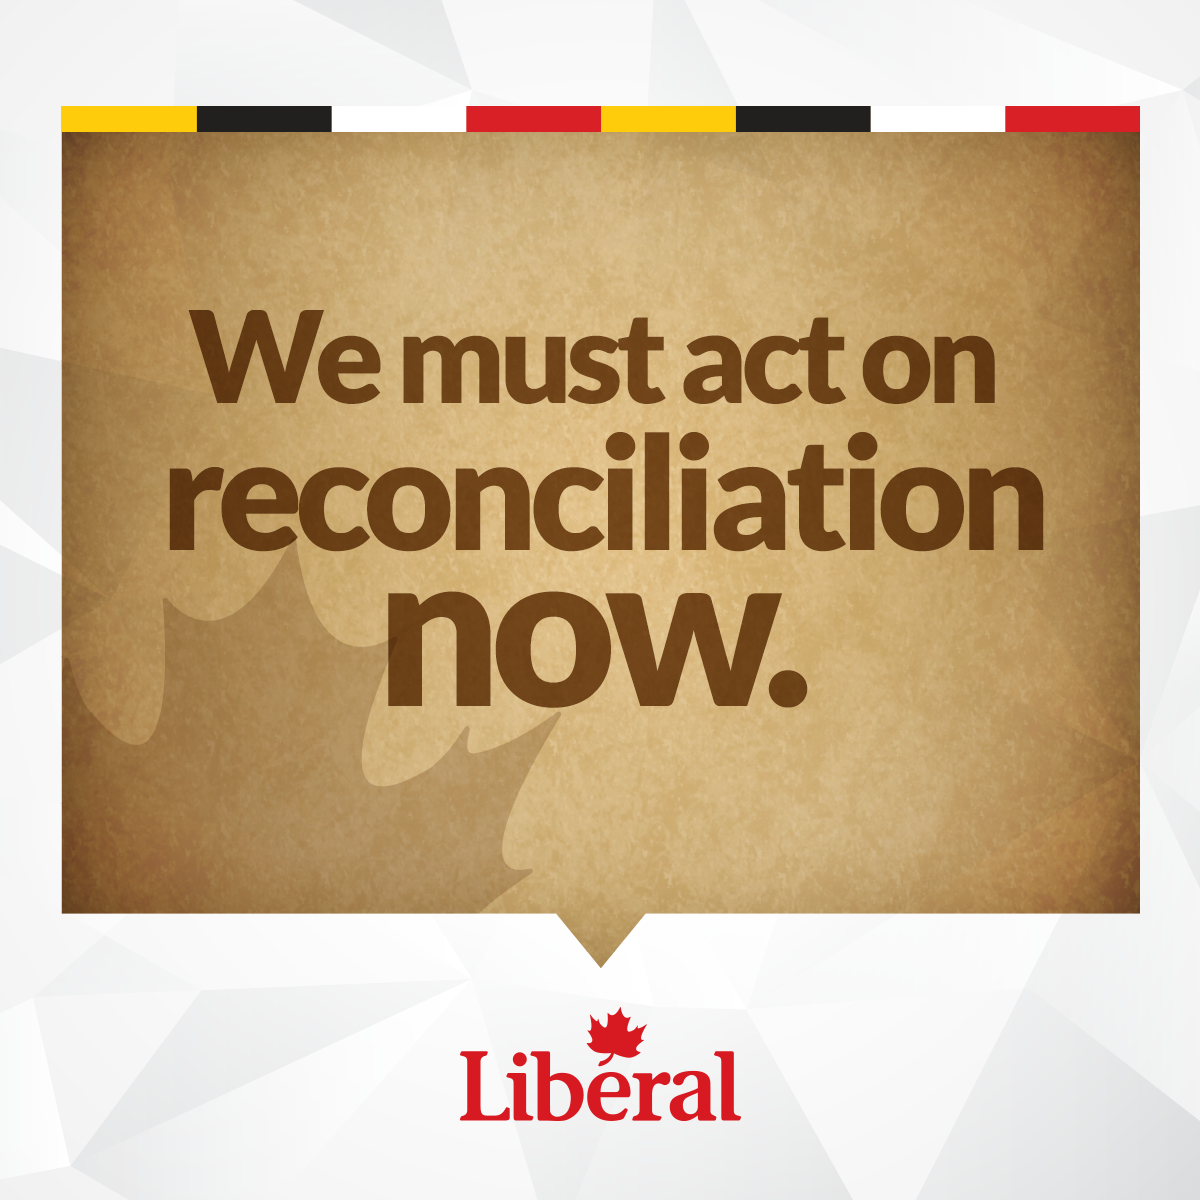 Reconciliation now